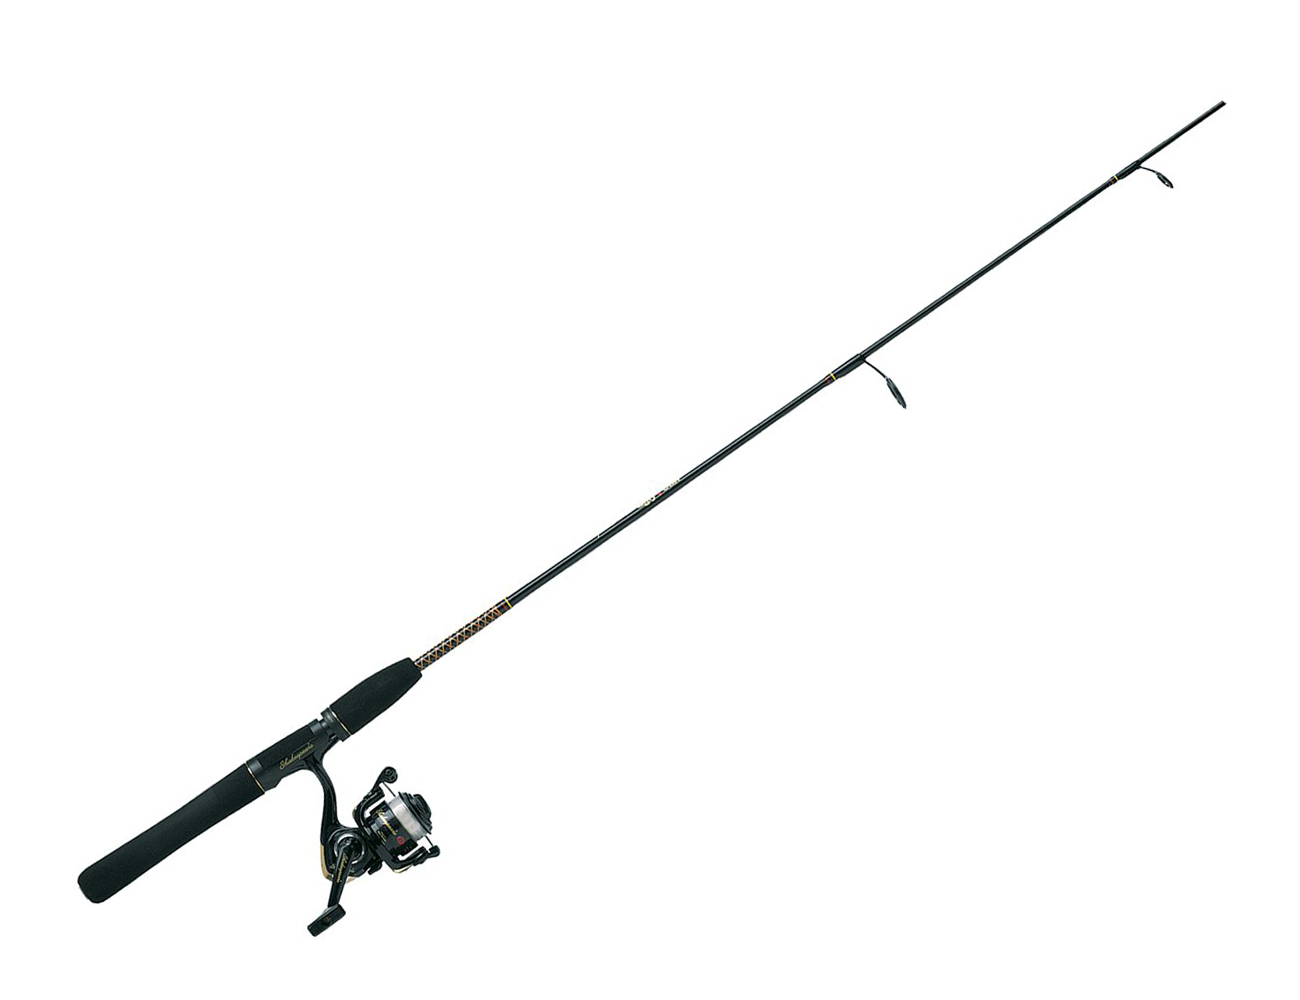 Fishing pole fishing rod clipart kiaavto 2 image